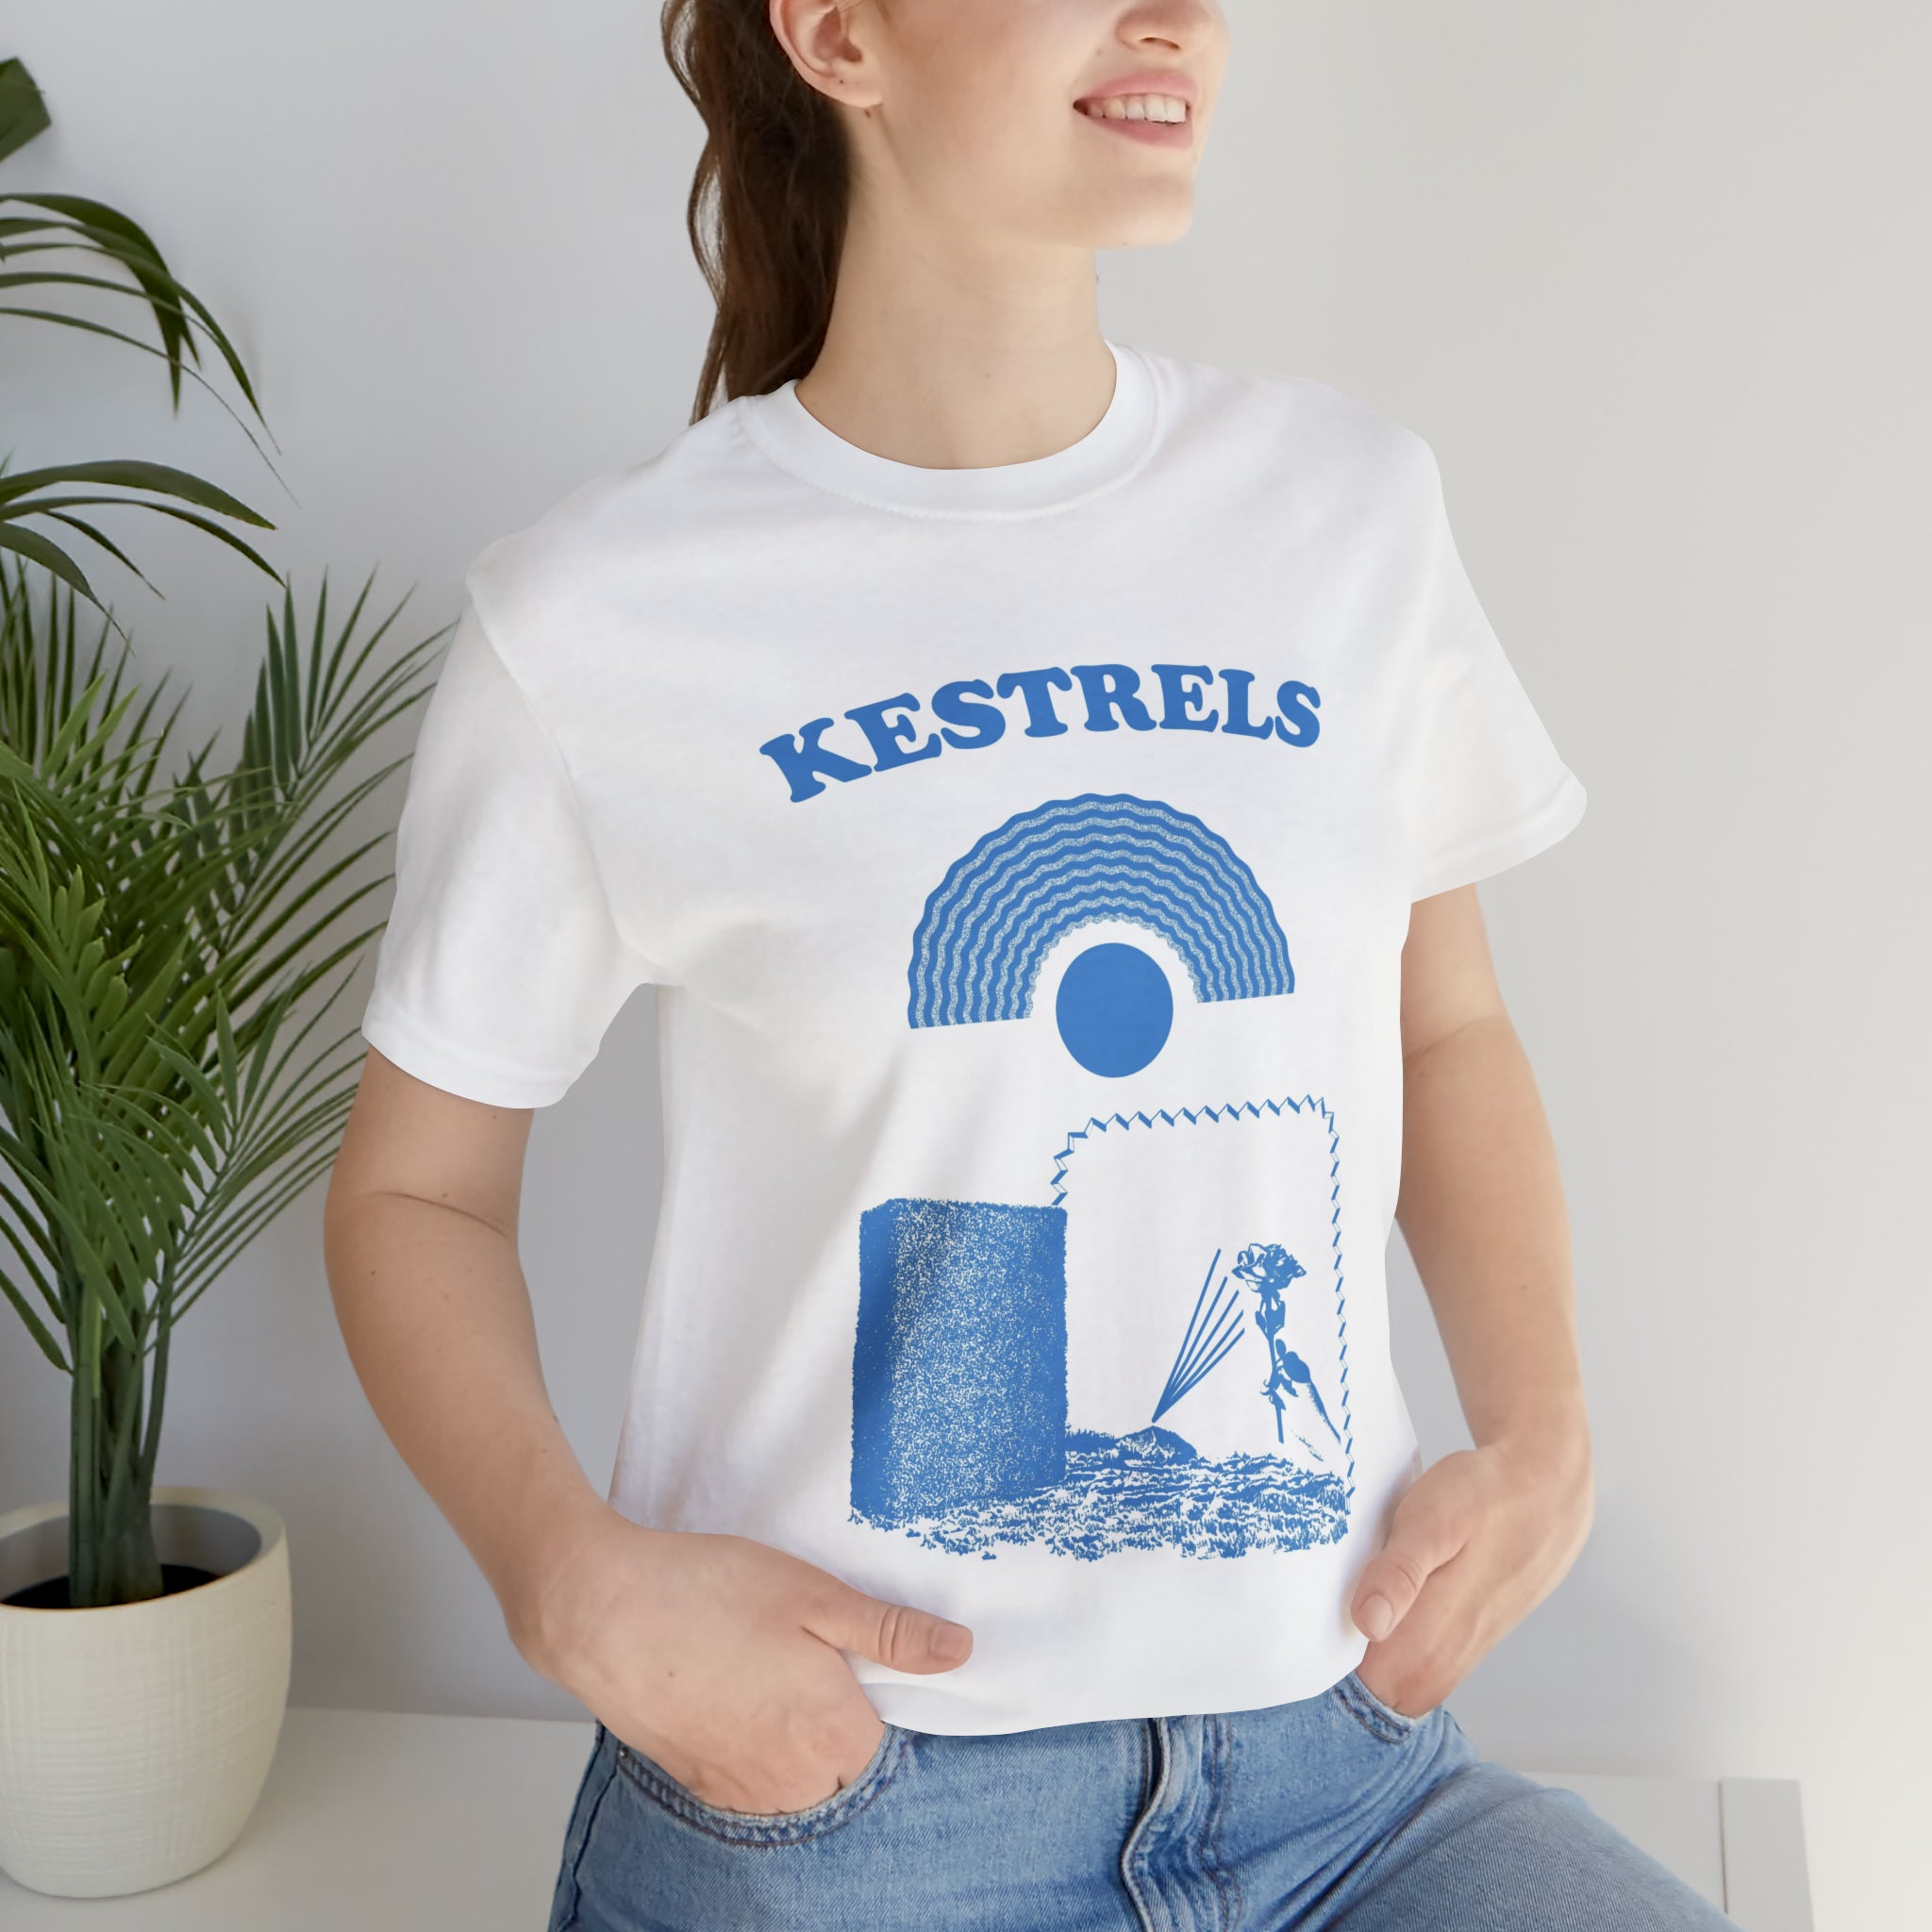 Kestrels - 2021 Tour T-Shirt